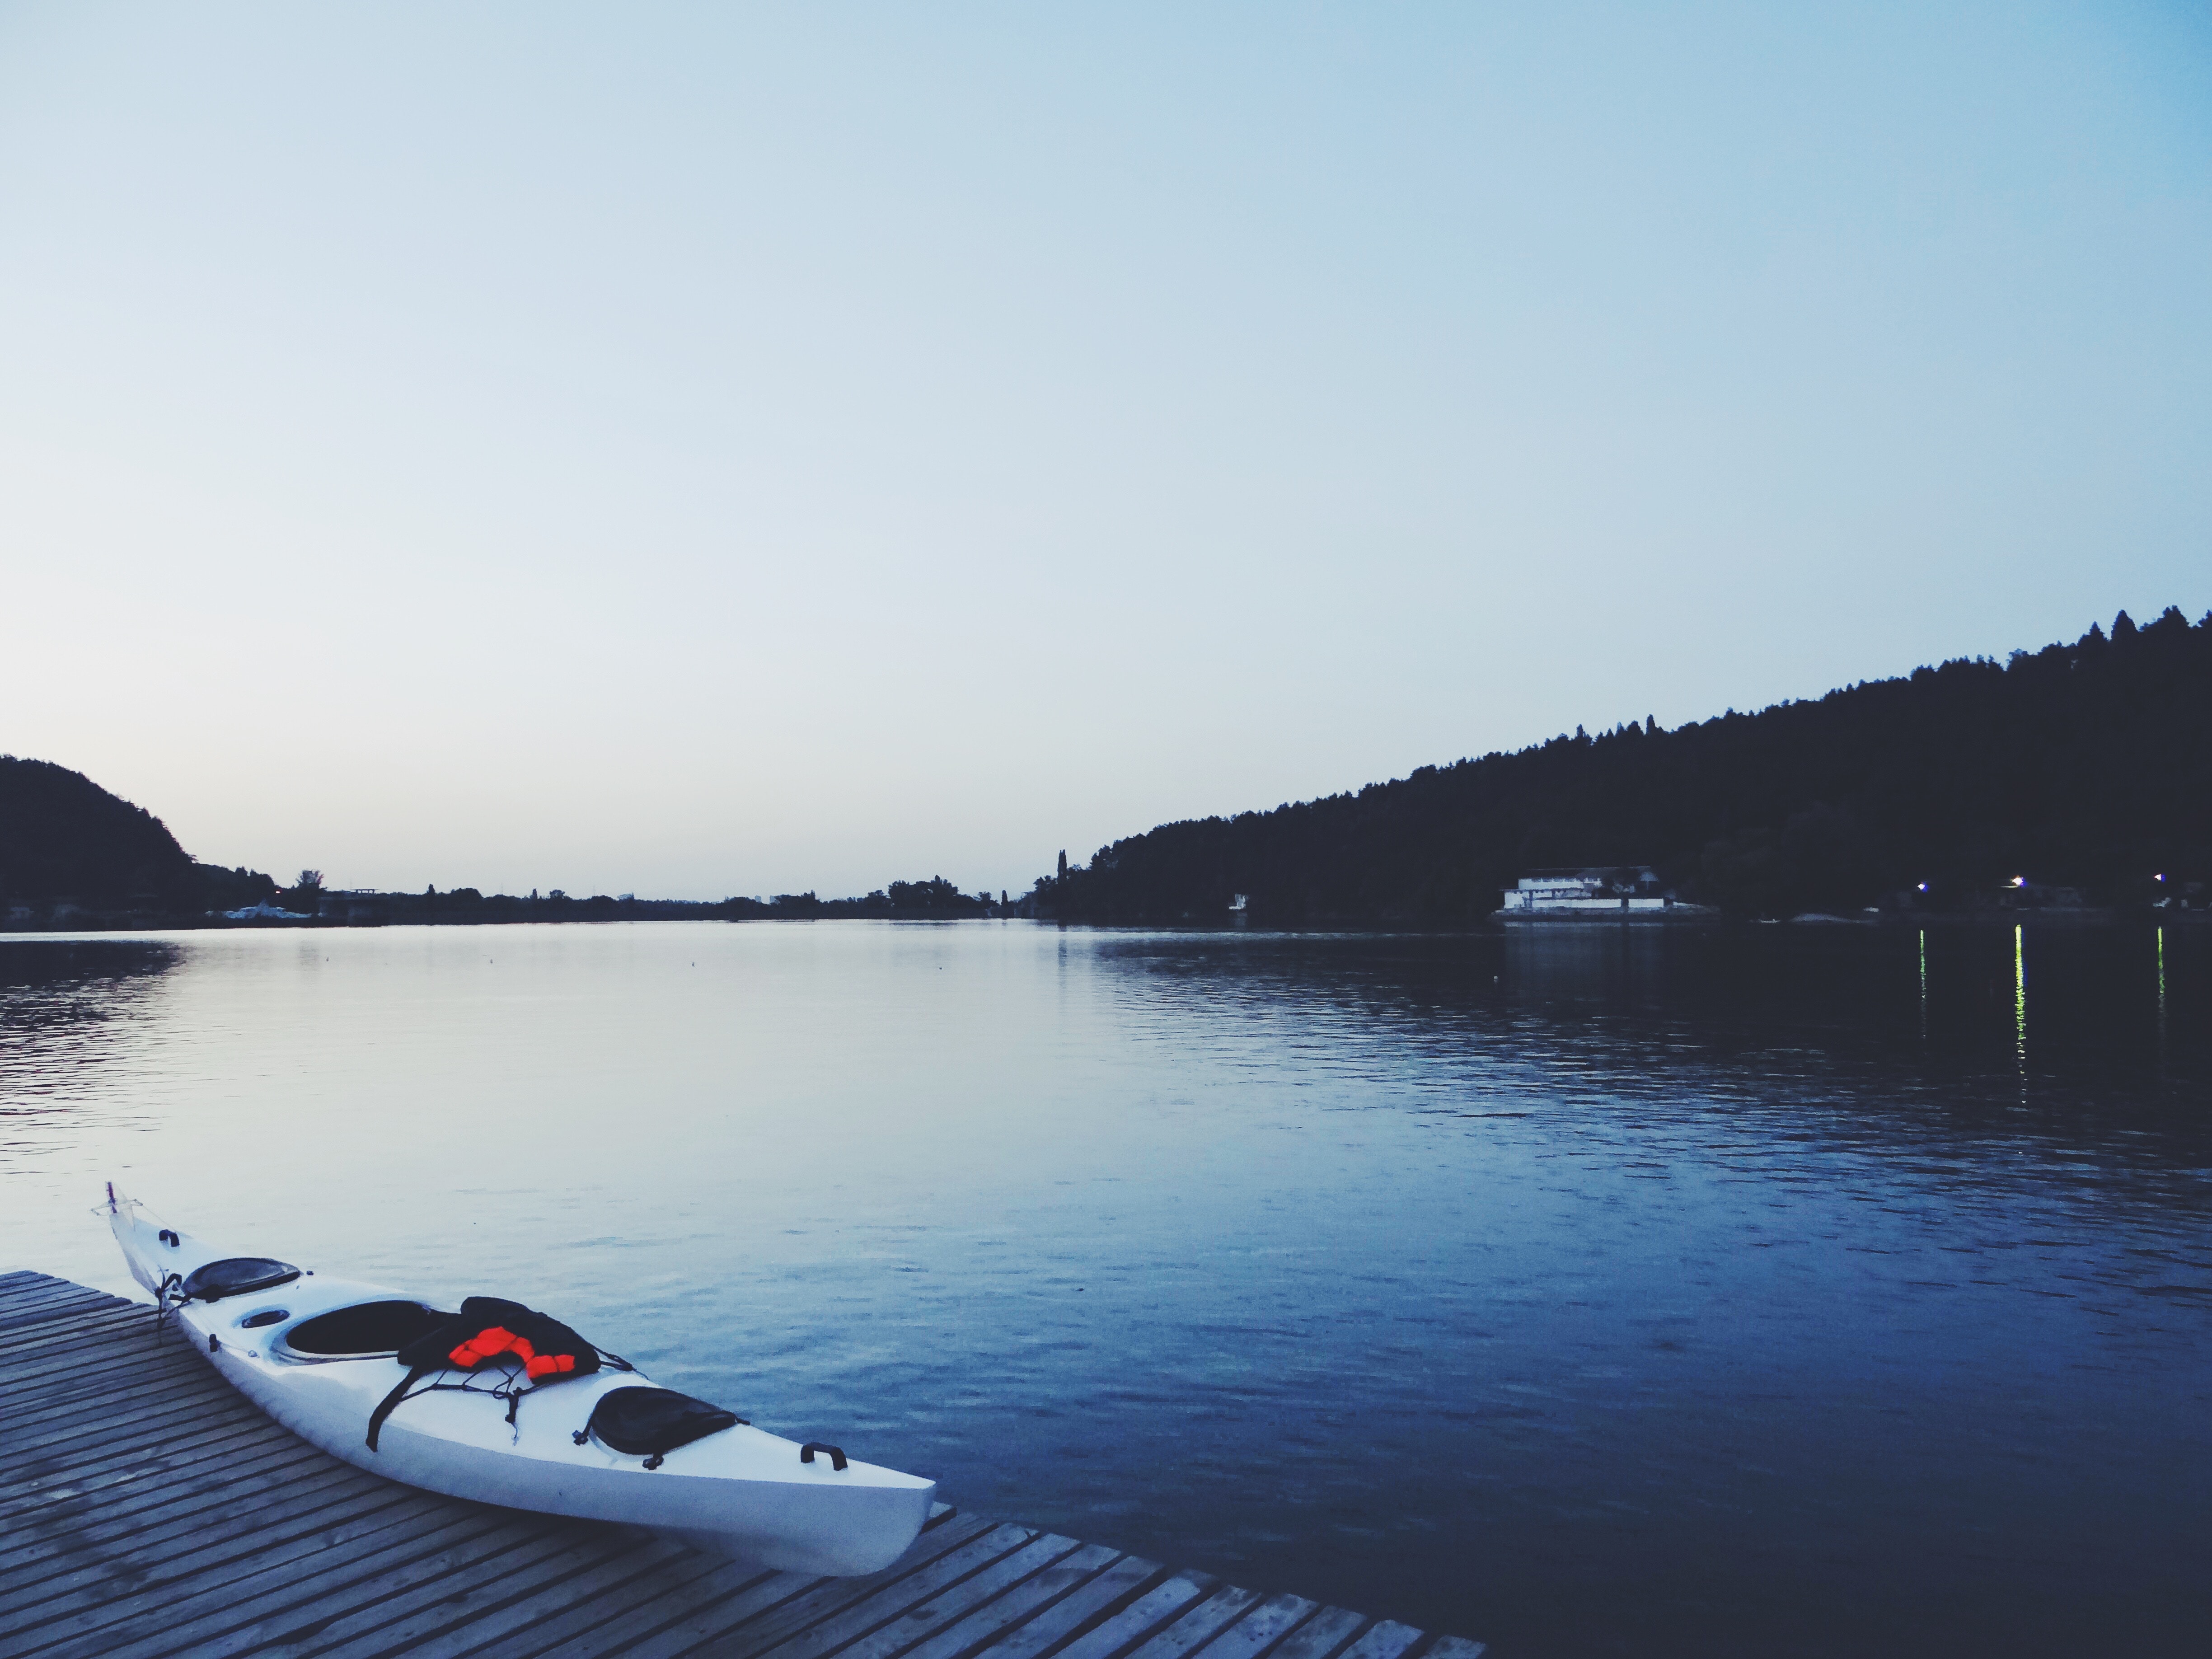 White kayak on brown wooden dock photo